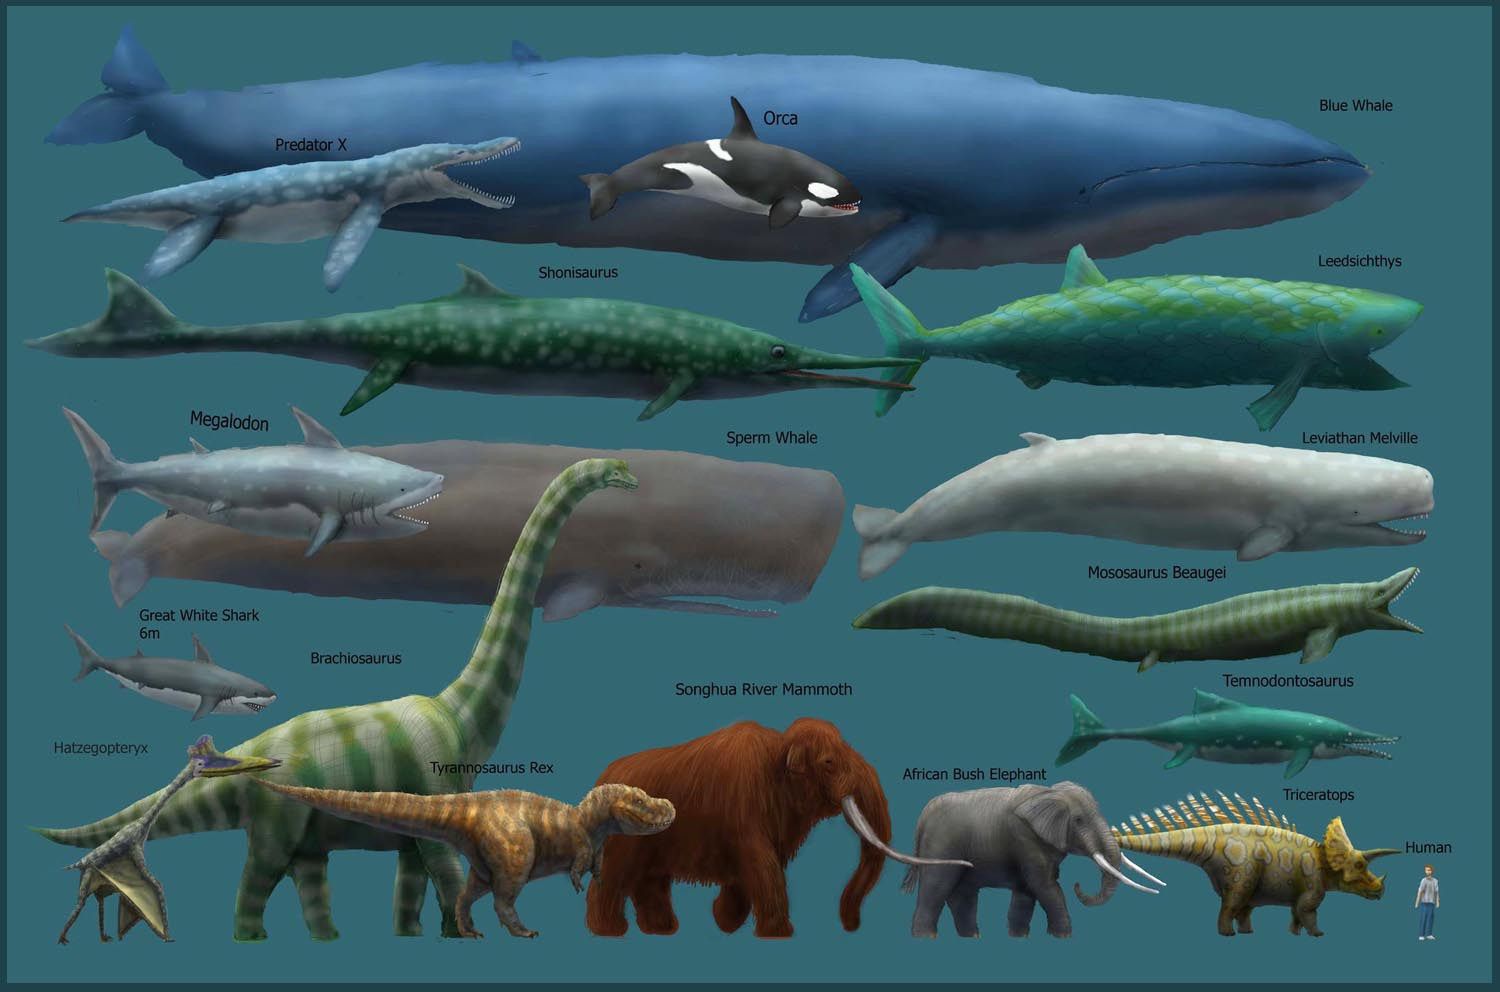 What's bigger than a blue whale?